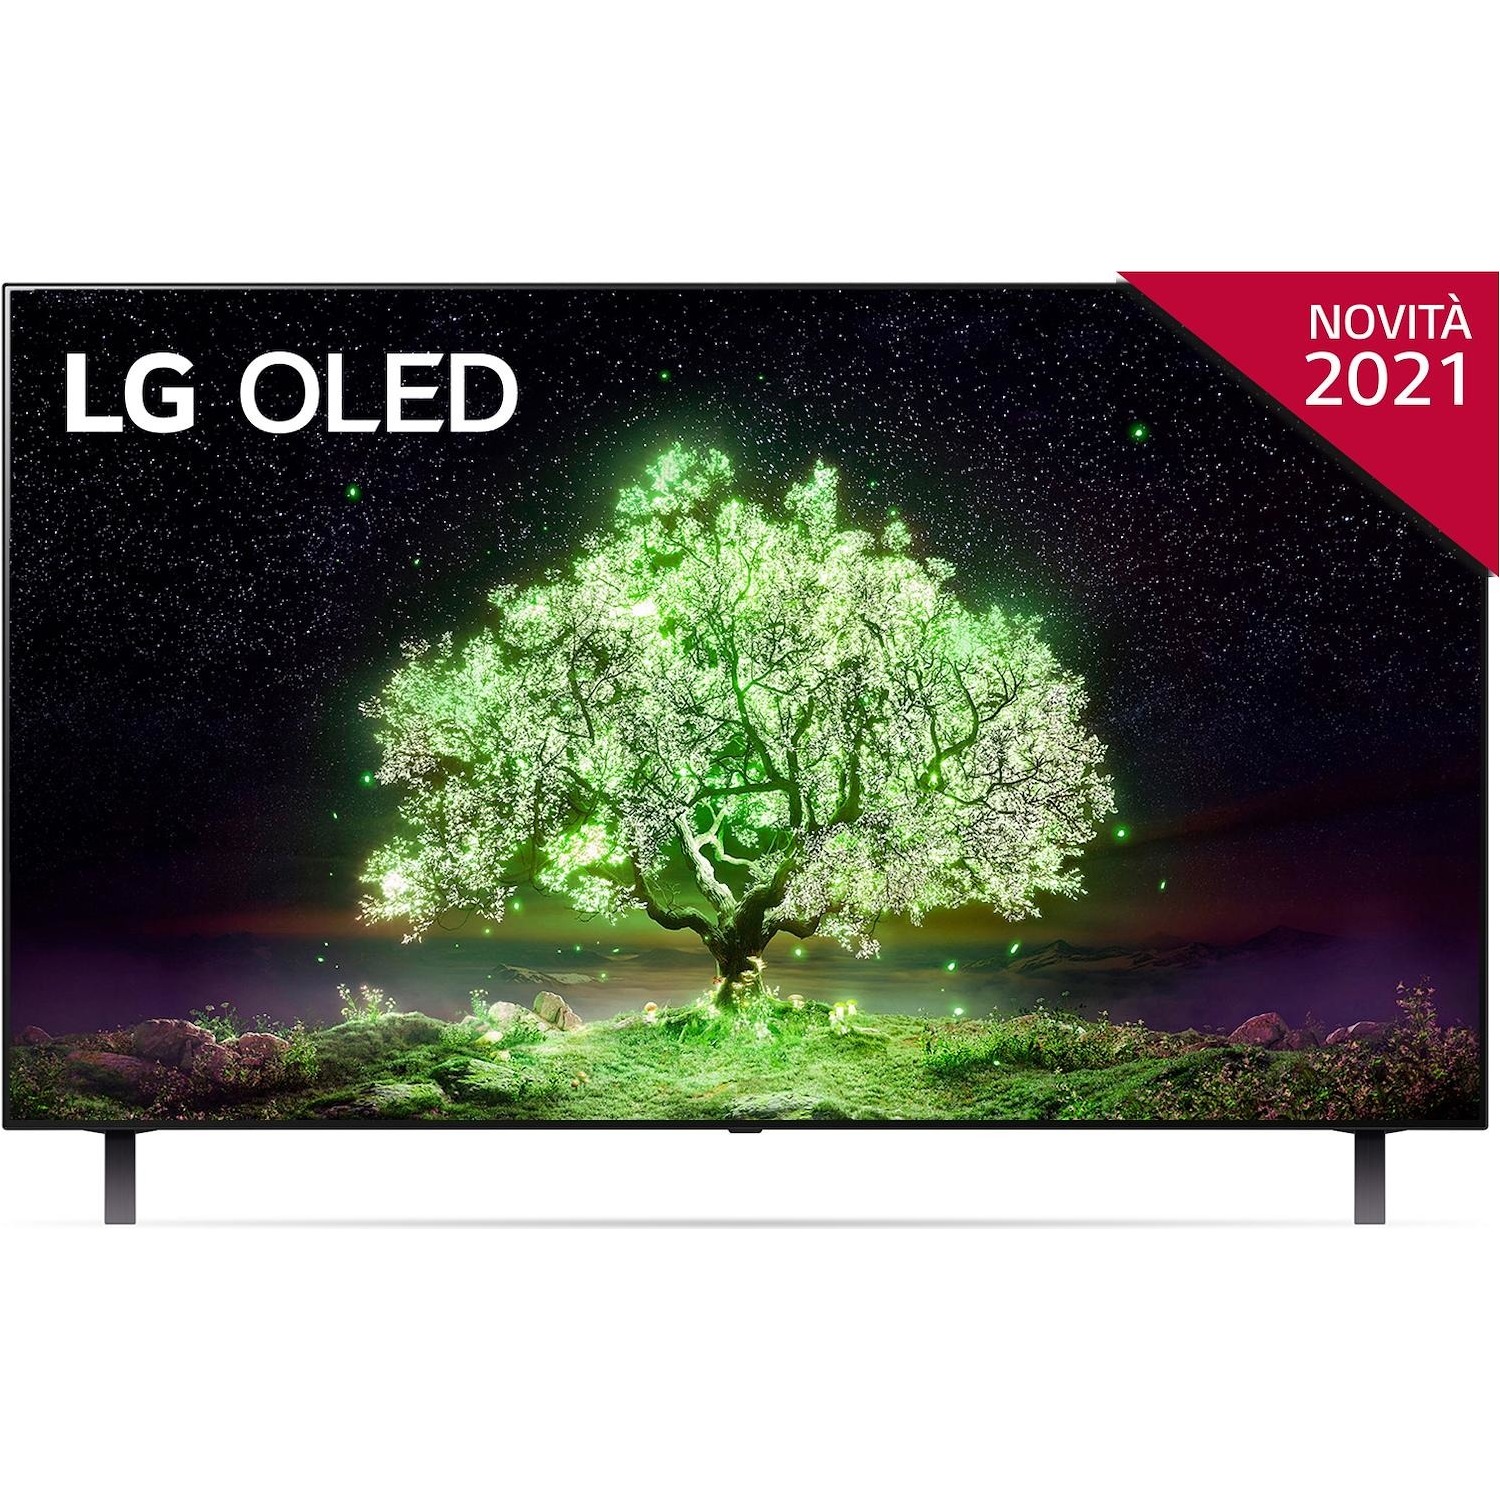 Immagine per TV OLED LG OLED48A16 Calibrato 4K e FULL HD da DIMOStore